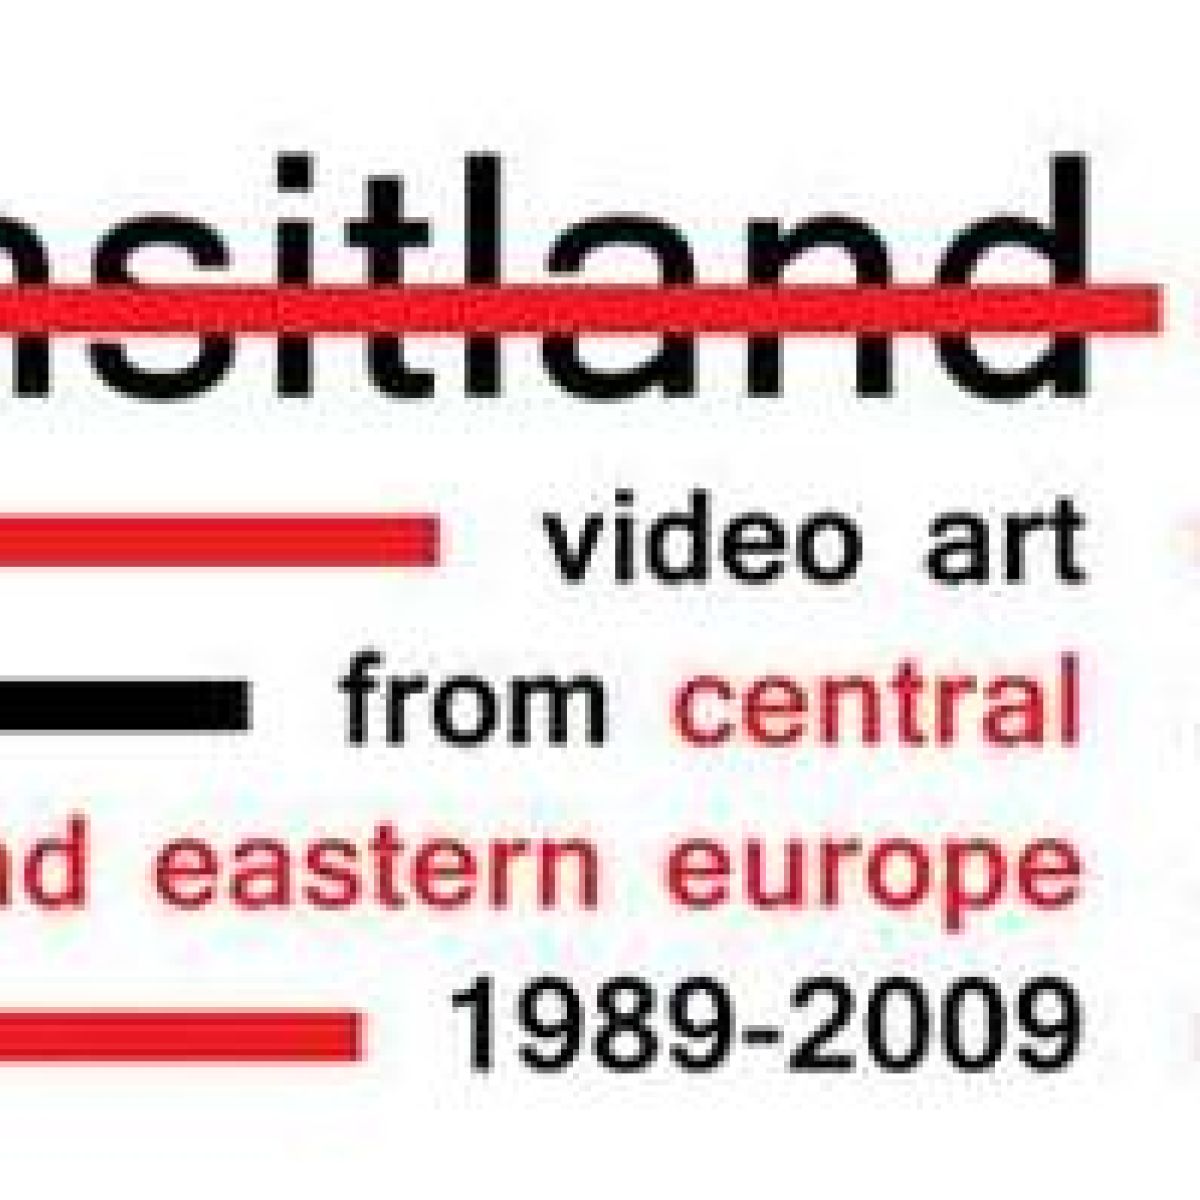 TRANSITLAND, VIDEO ART CENTRALNA I WSCHODNIA EUROPA, 1989-2009.